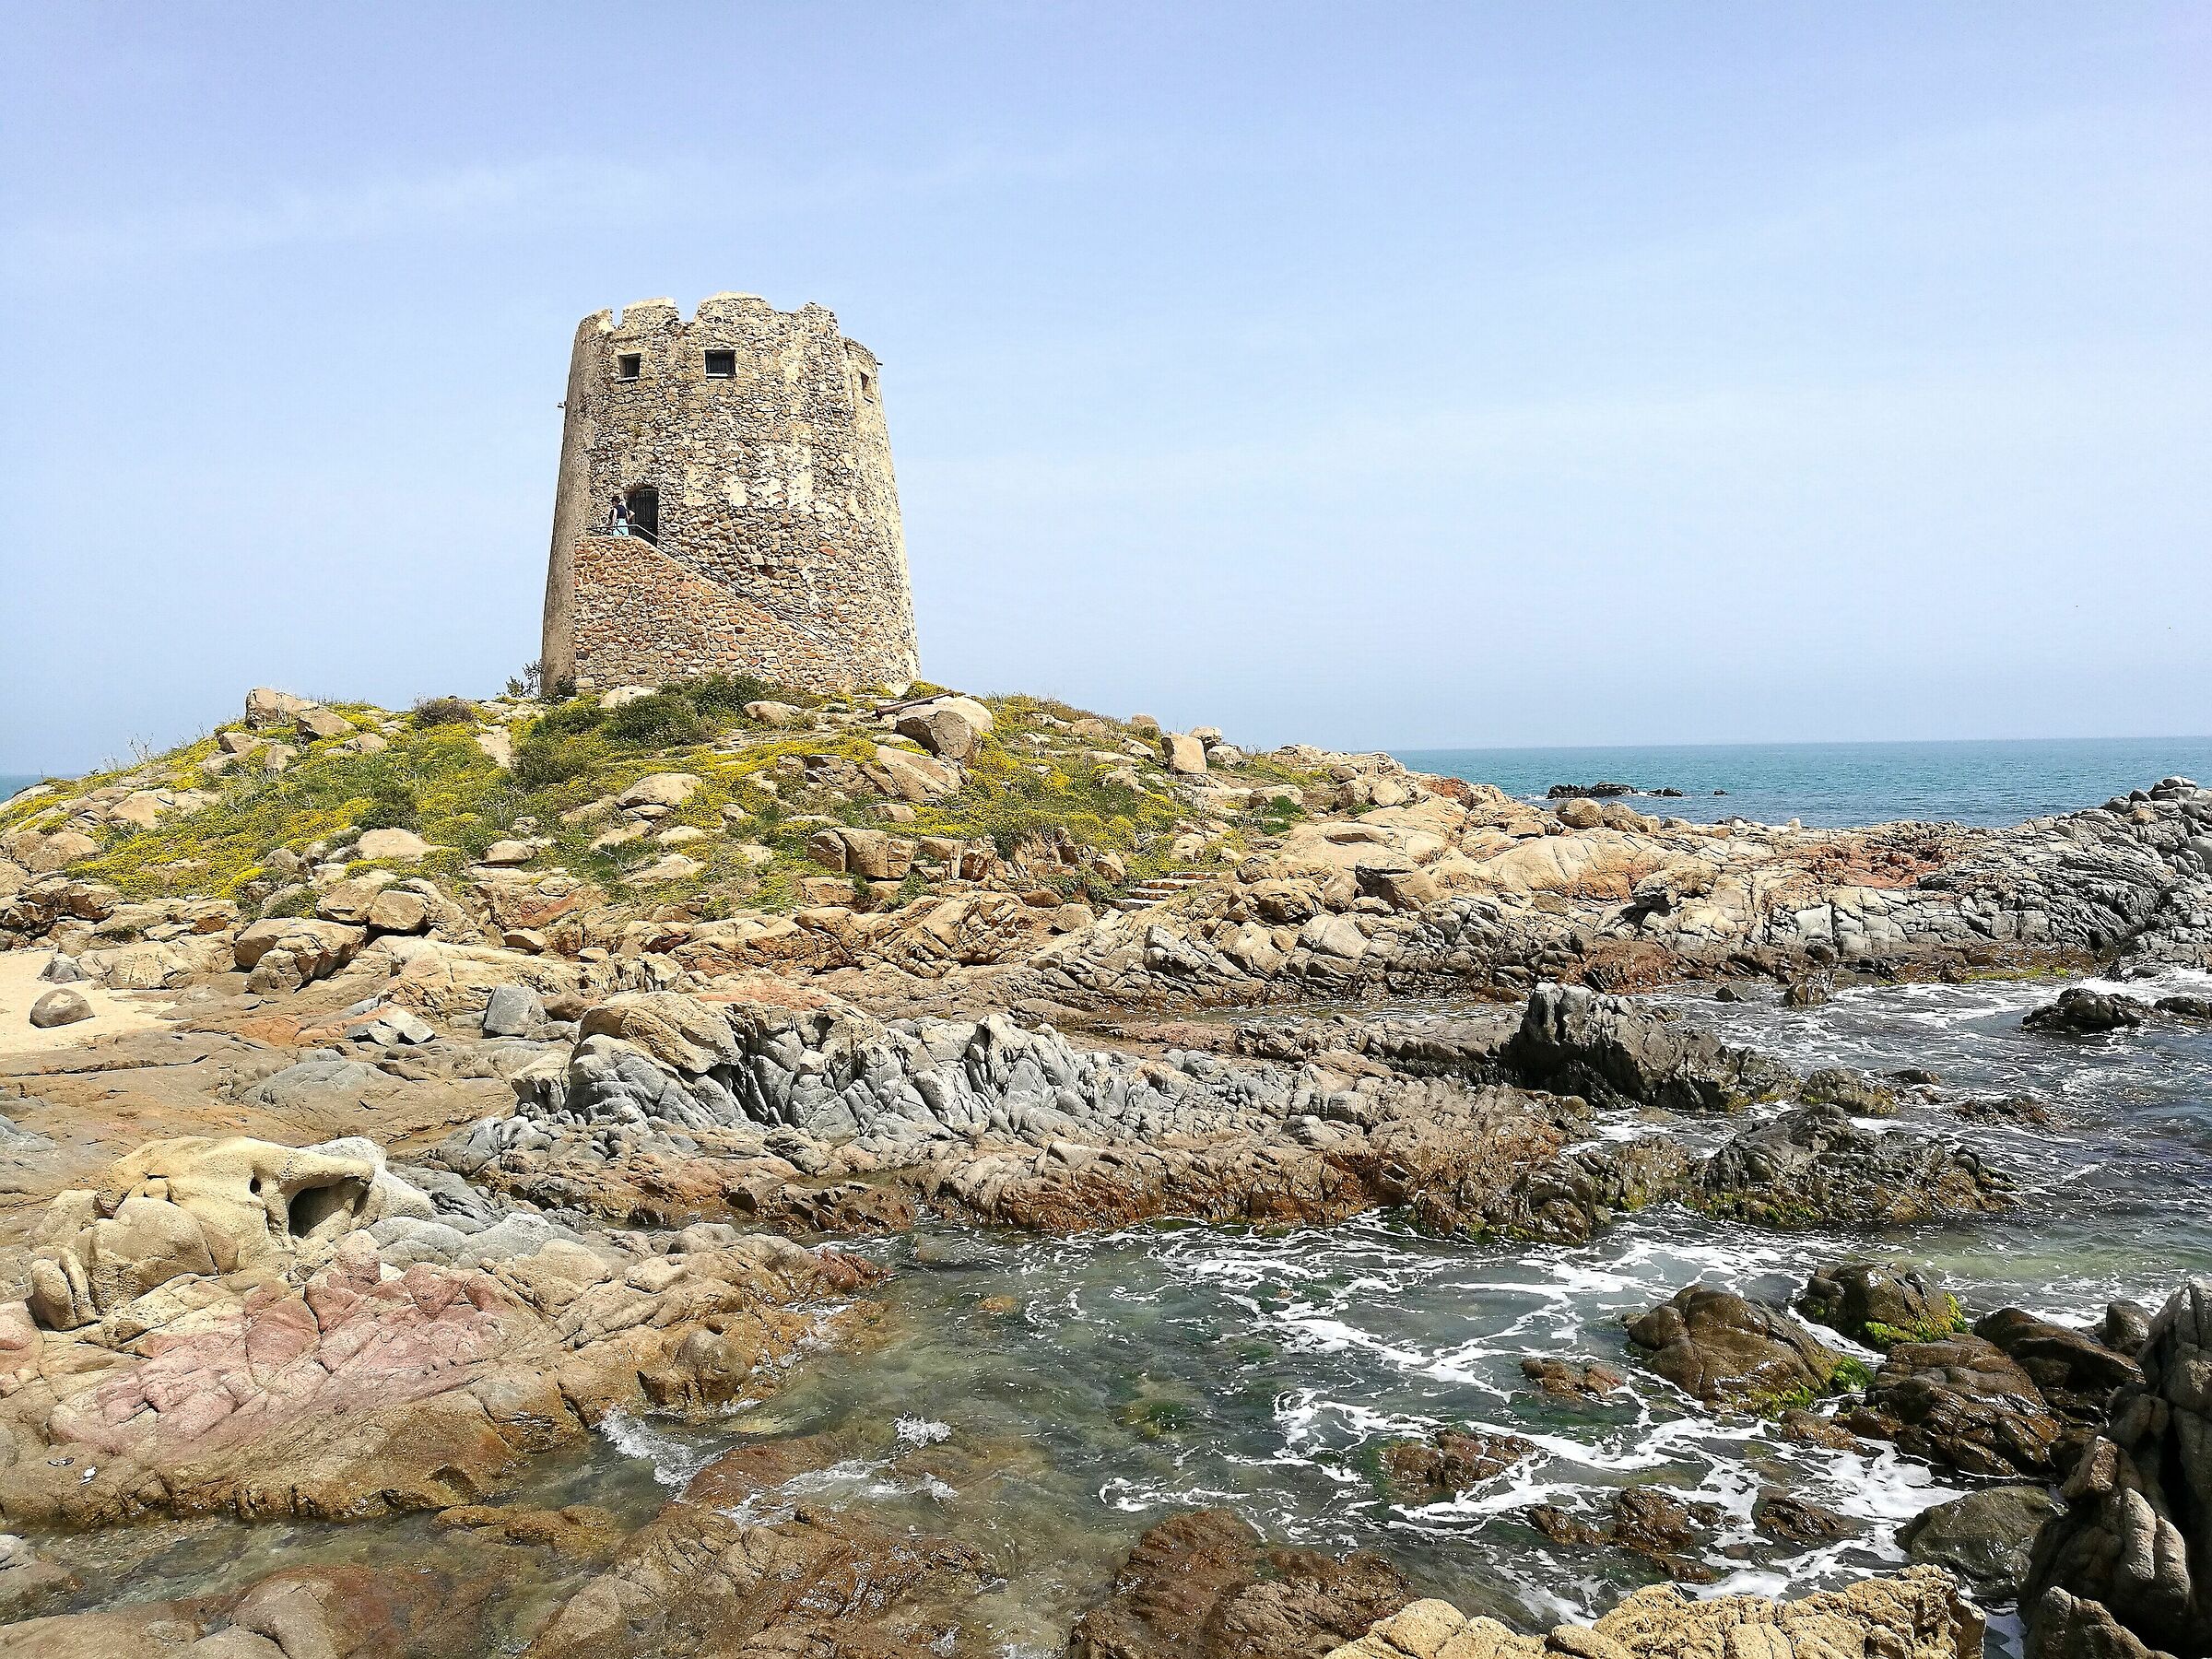 Tower of Bari...